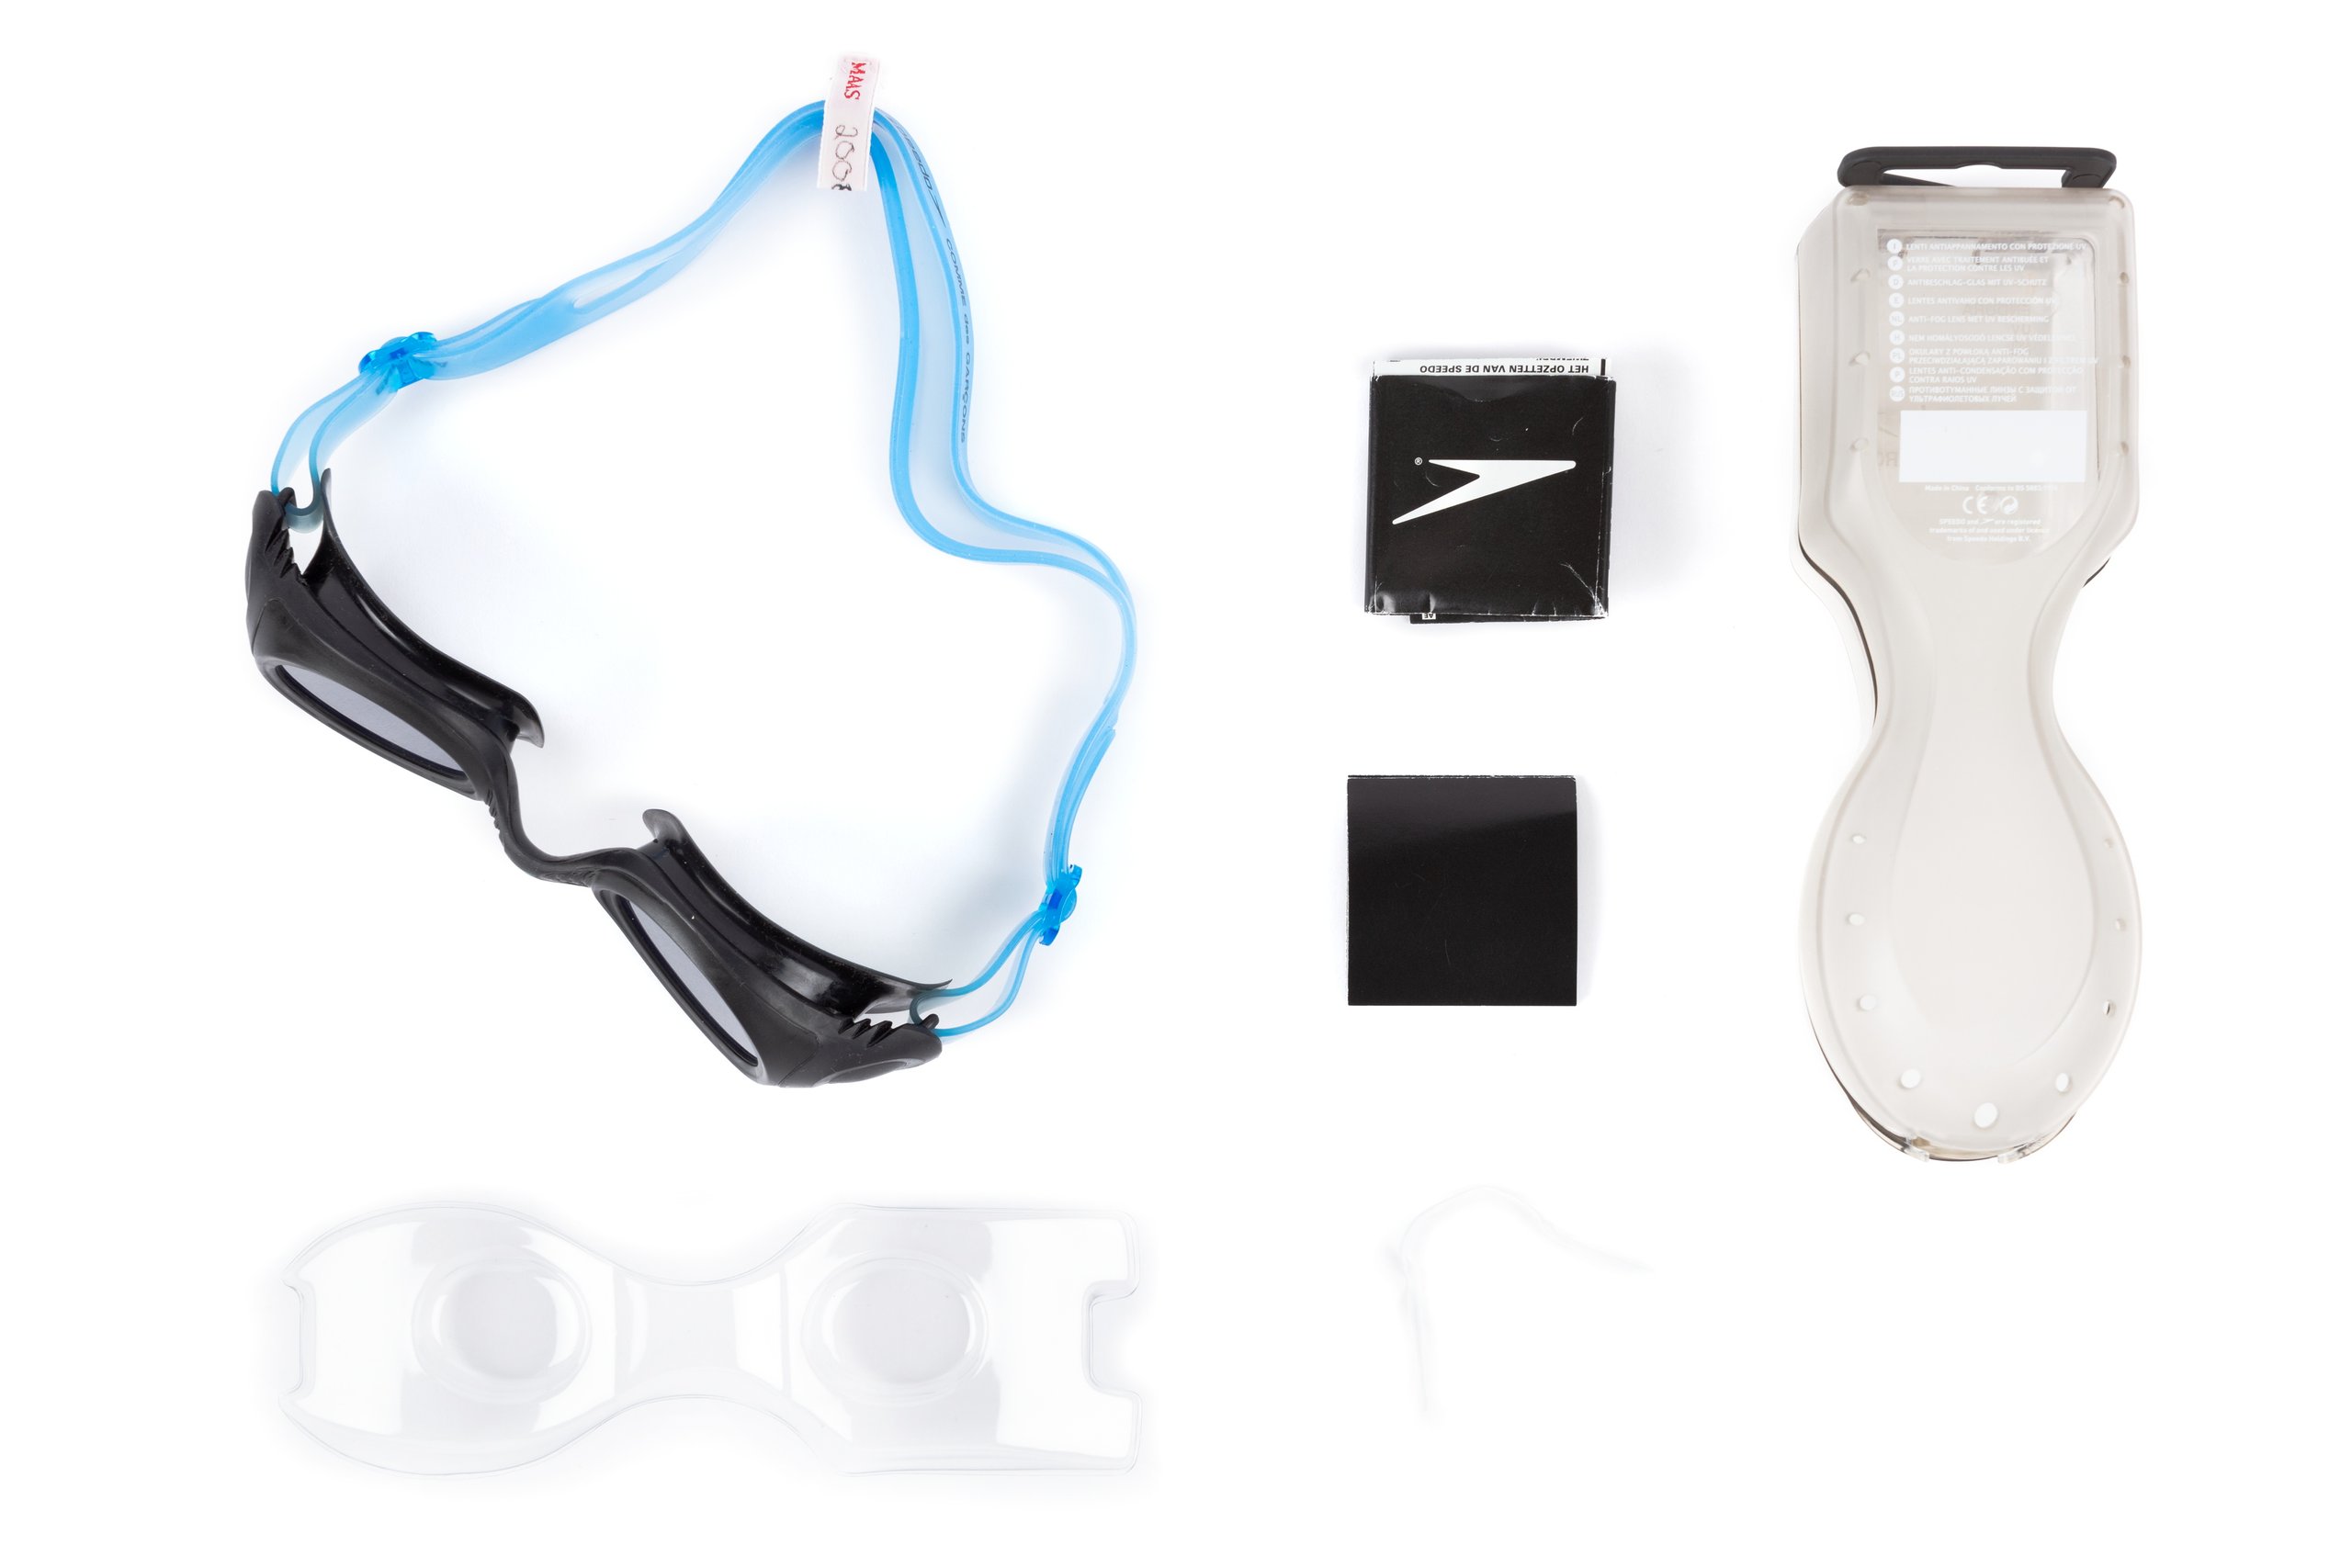 Swimming goggles designed by Rei Kawakubo for Speedo